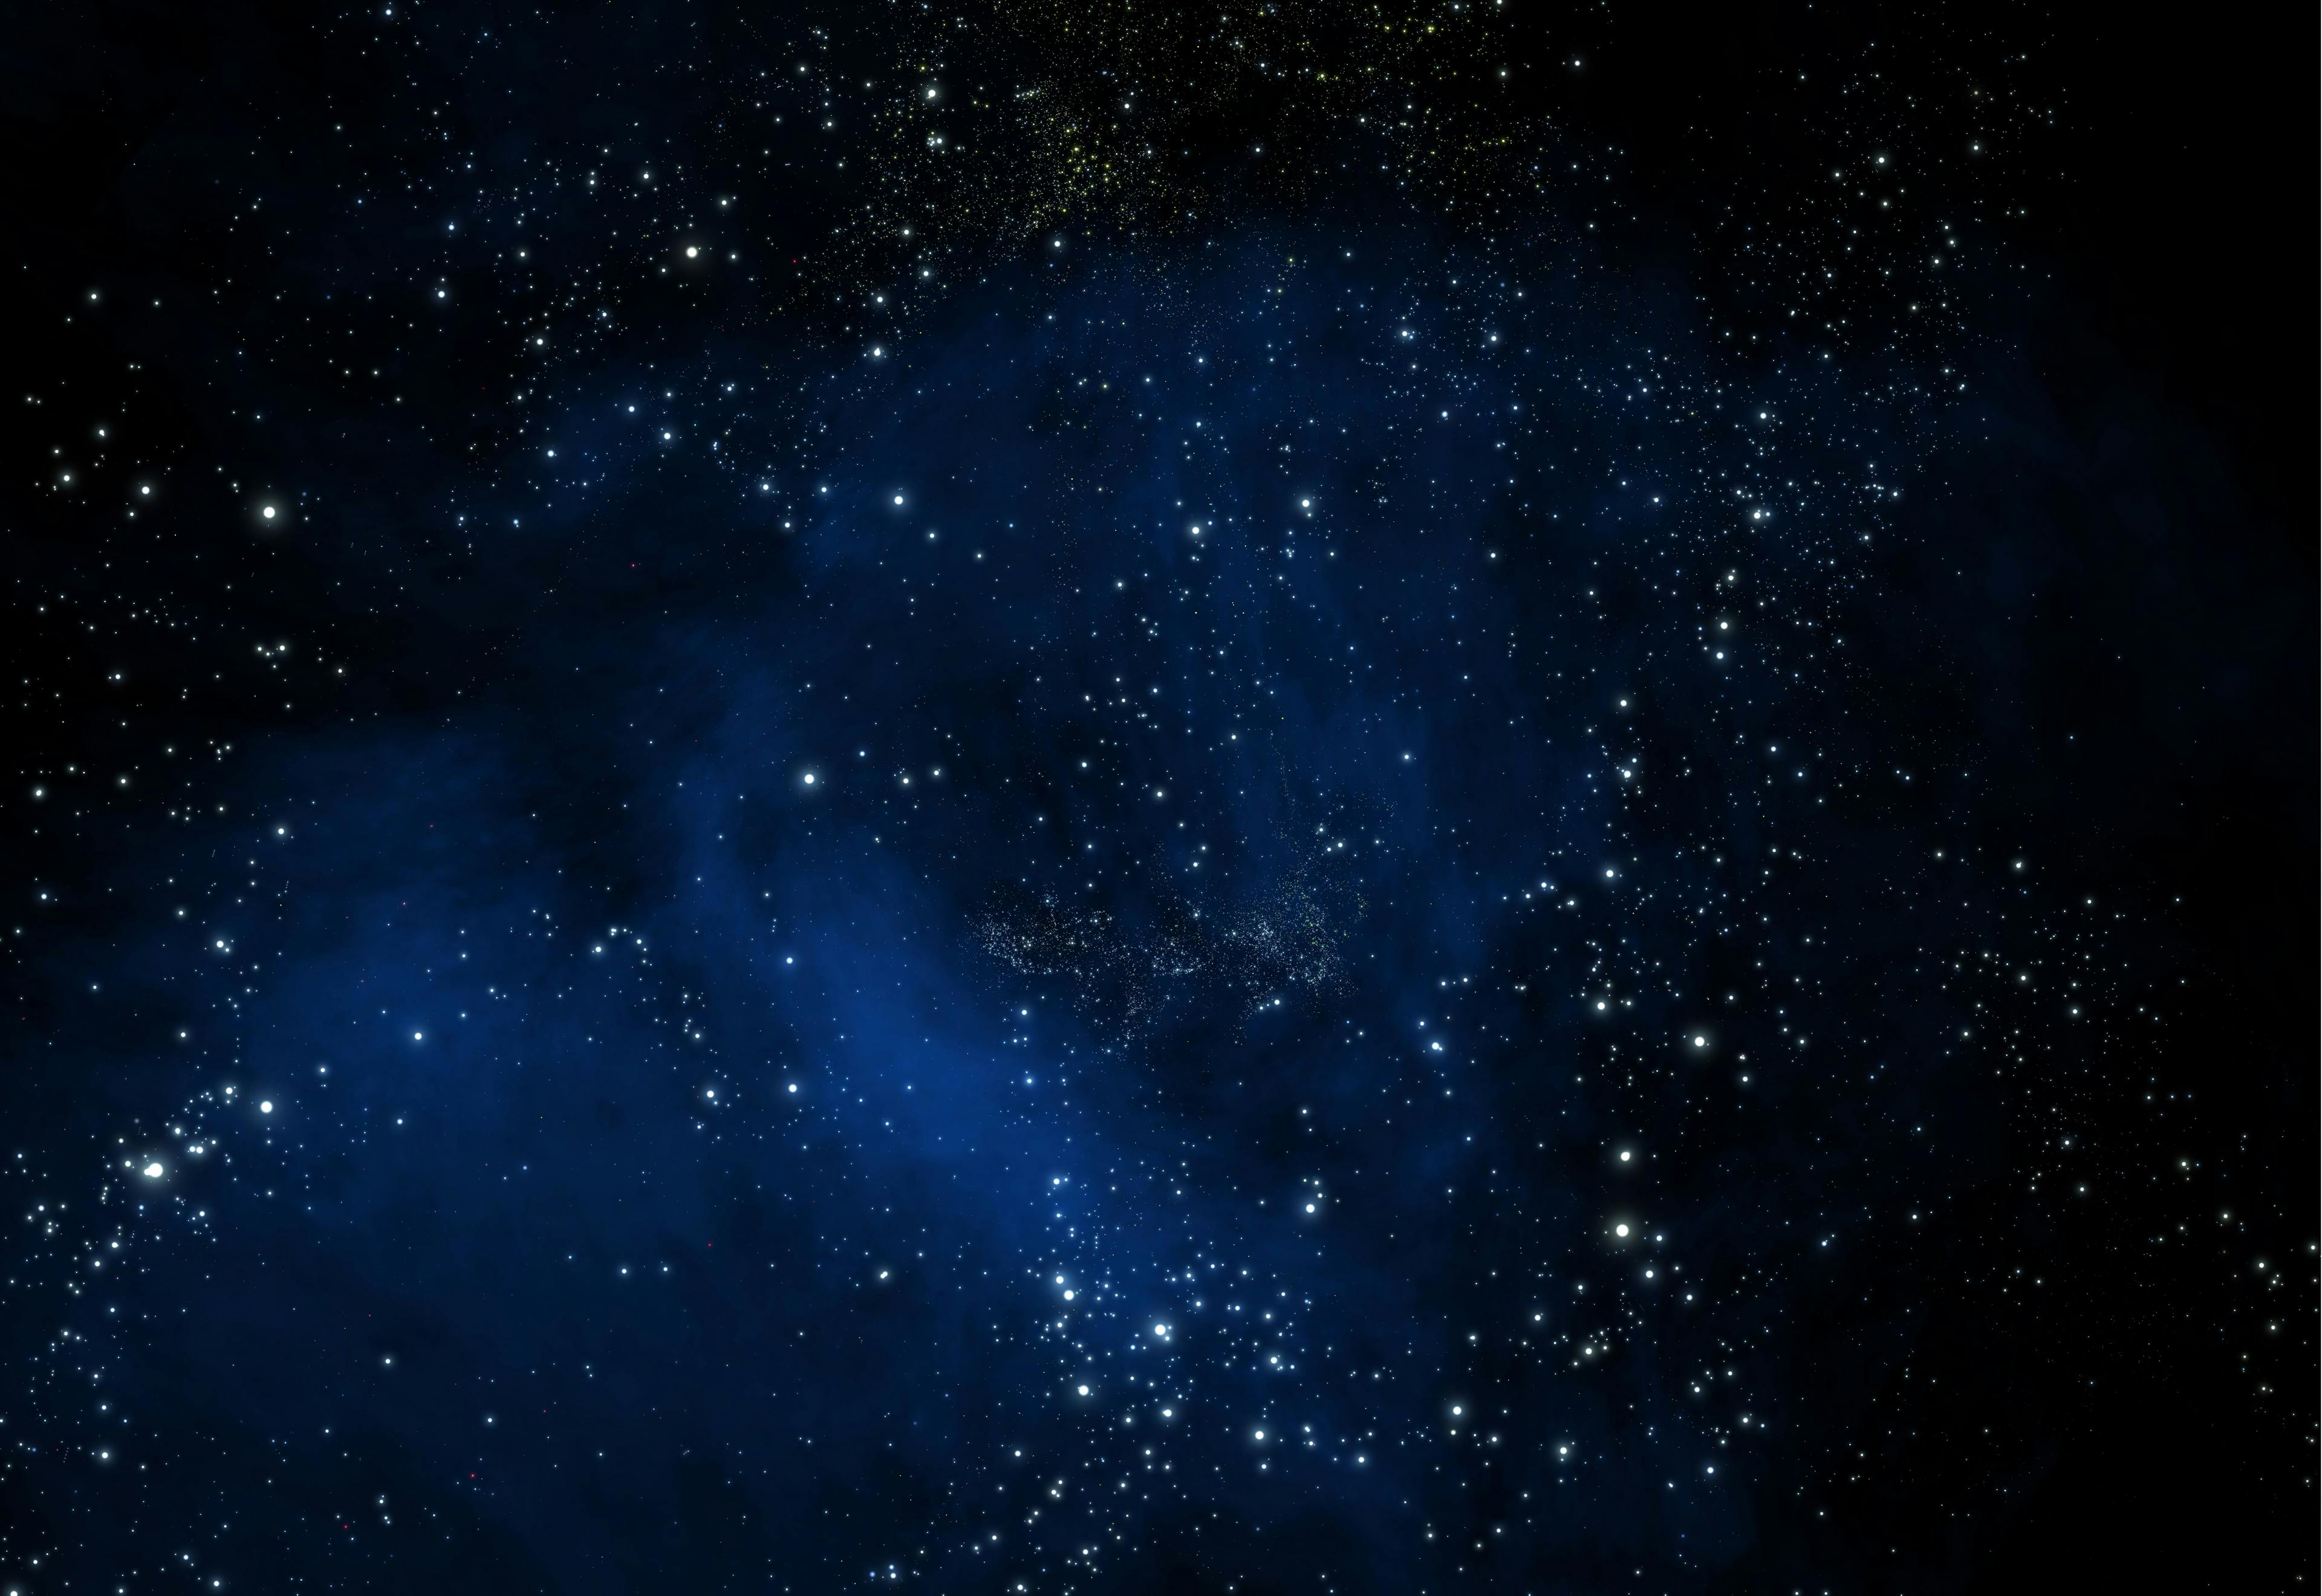 Space galaxy | Image Credit: © Natalia80 - stock.adobe.com